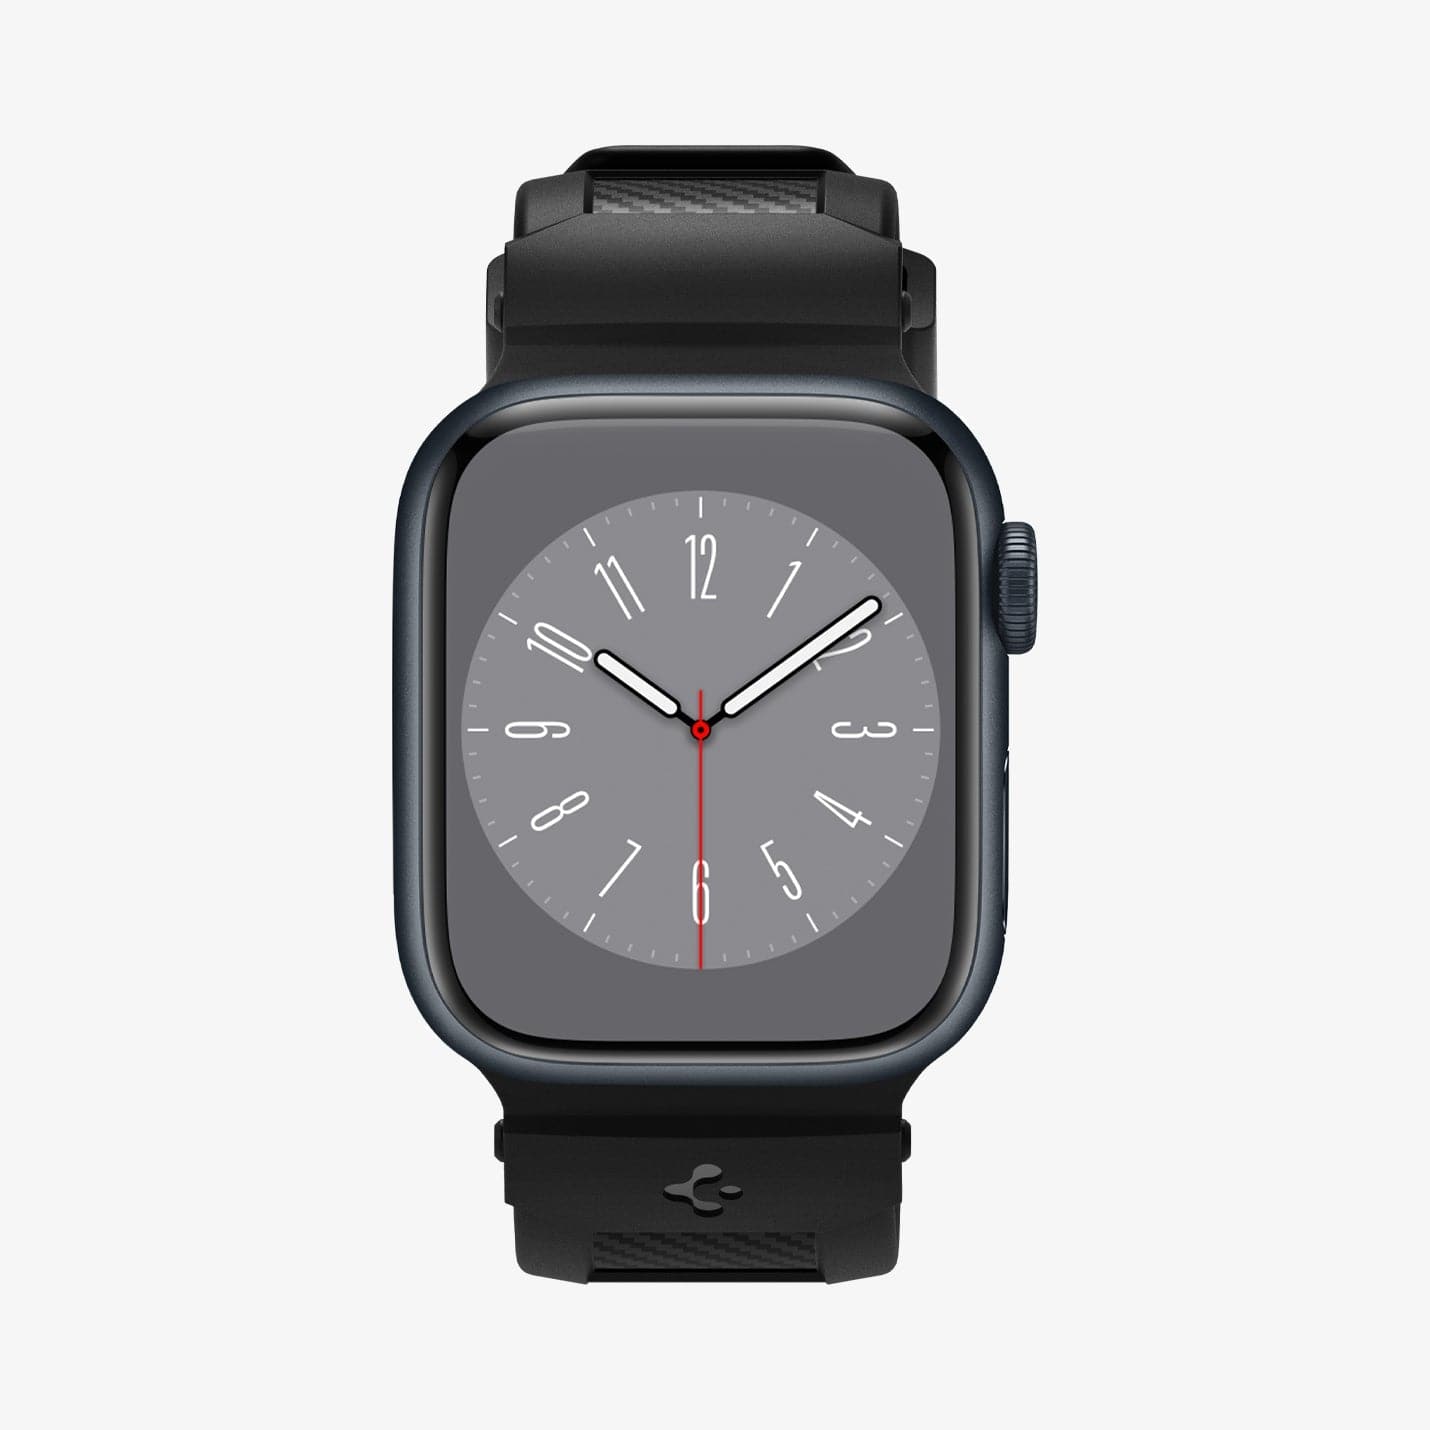 AMP02855 - Apple Watch Series (Apple Watch (41mm)/Apple Watch (38mm)) in matte black showing the front